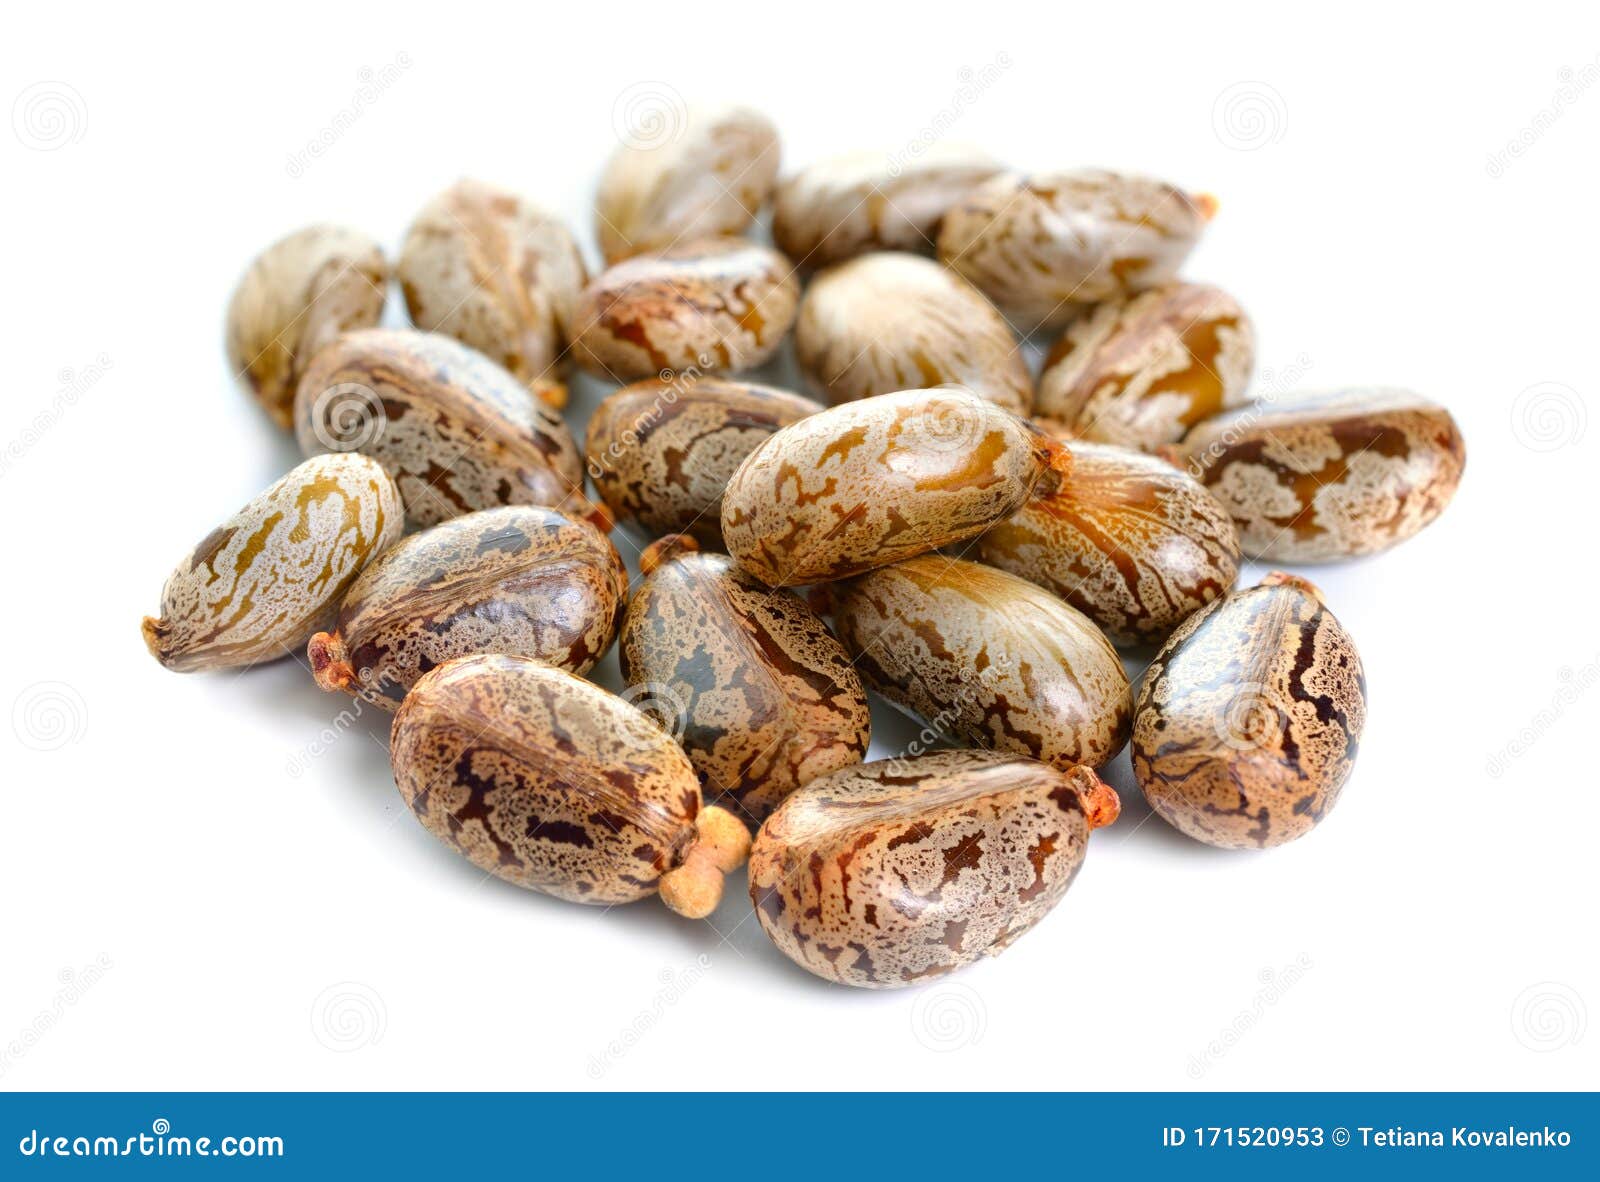 seed of ricinus communis, the castor bean or castor oil plant.  on white background